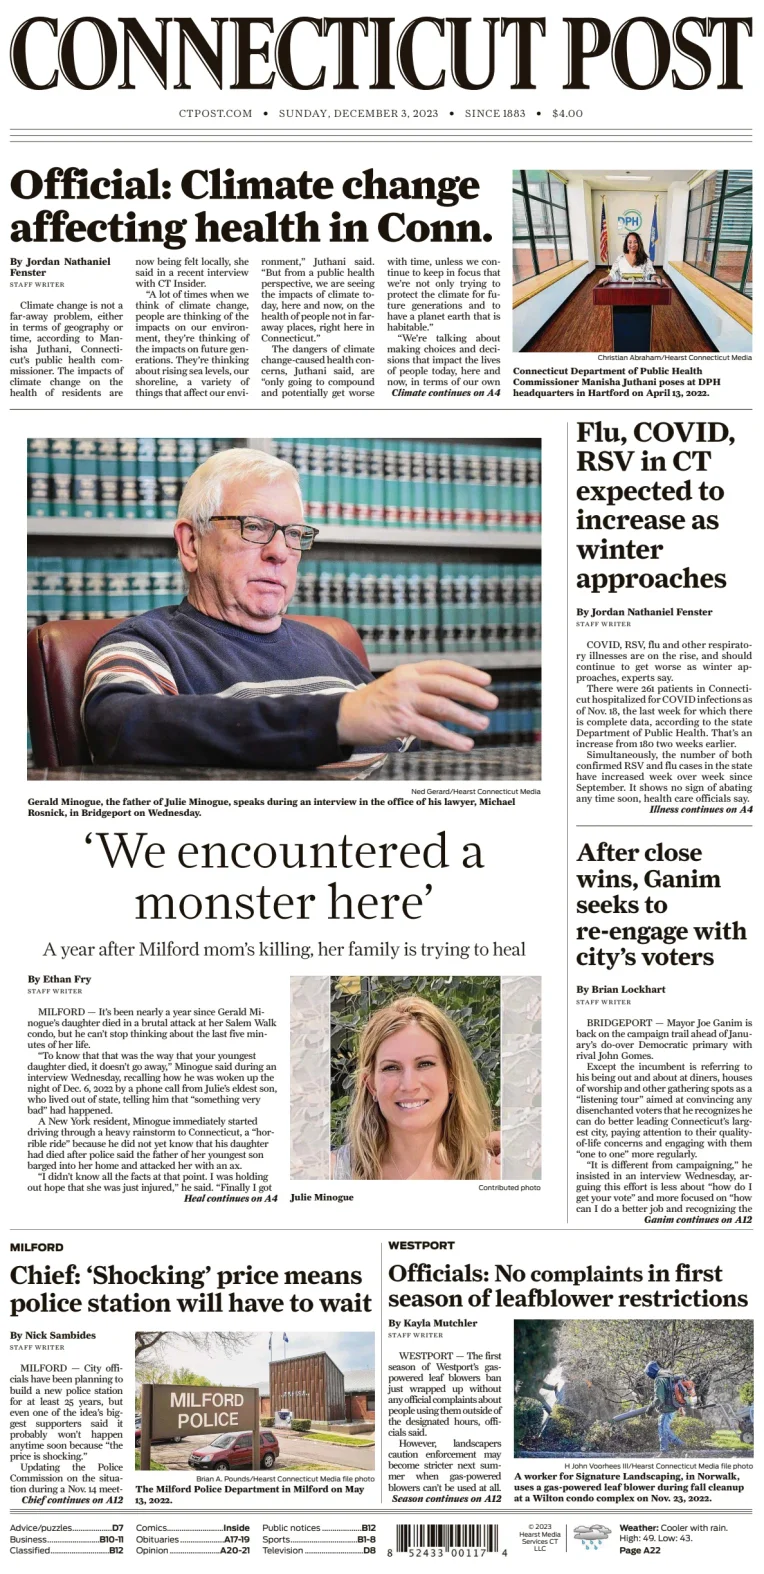 Connecticut Post (Sunday)